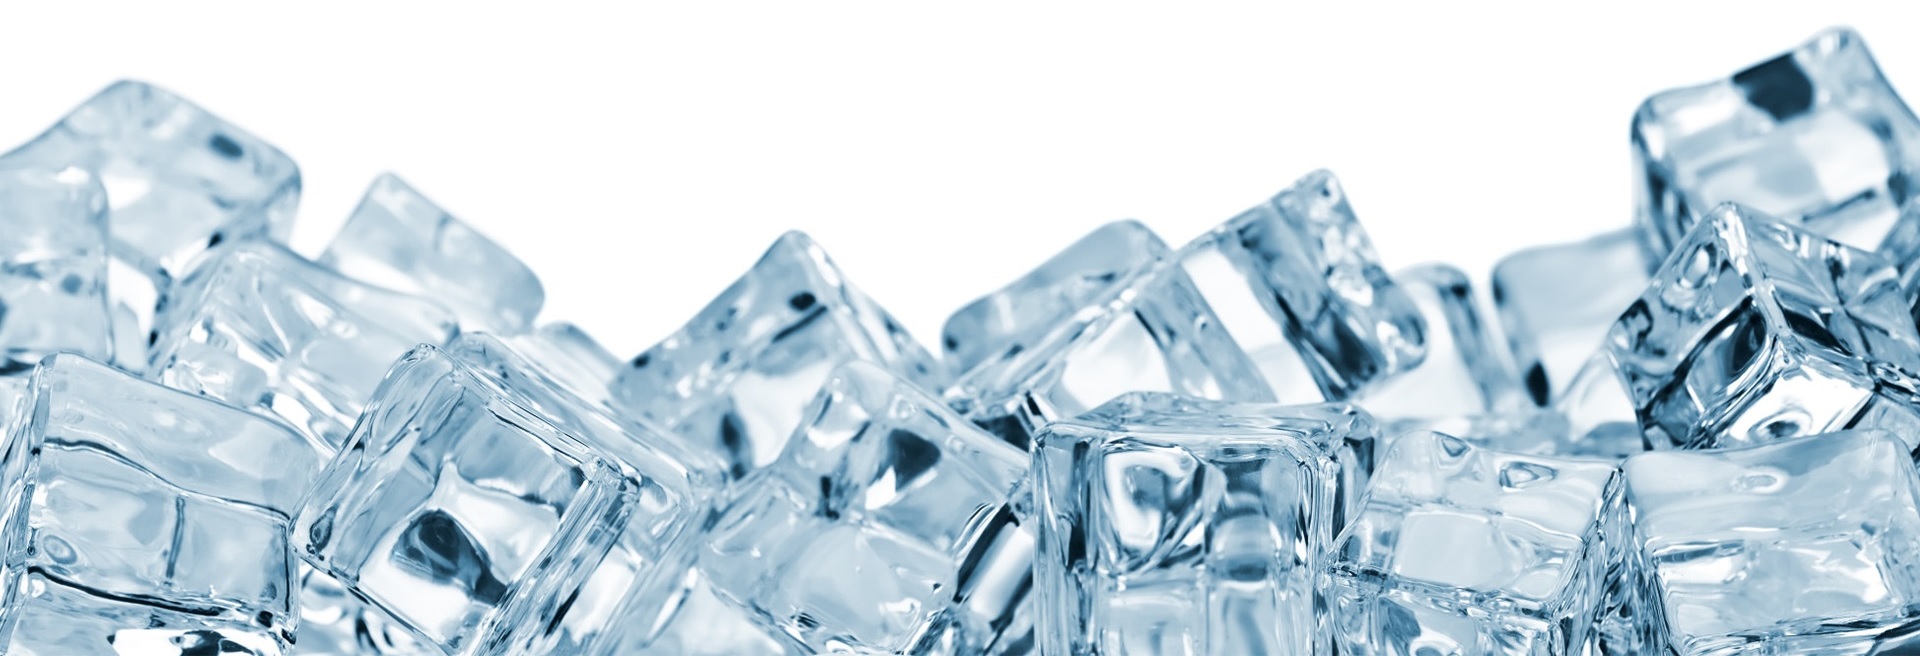 Ice image